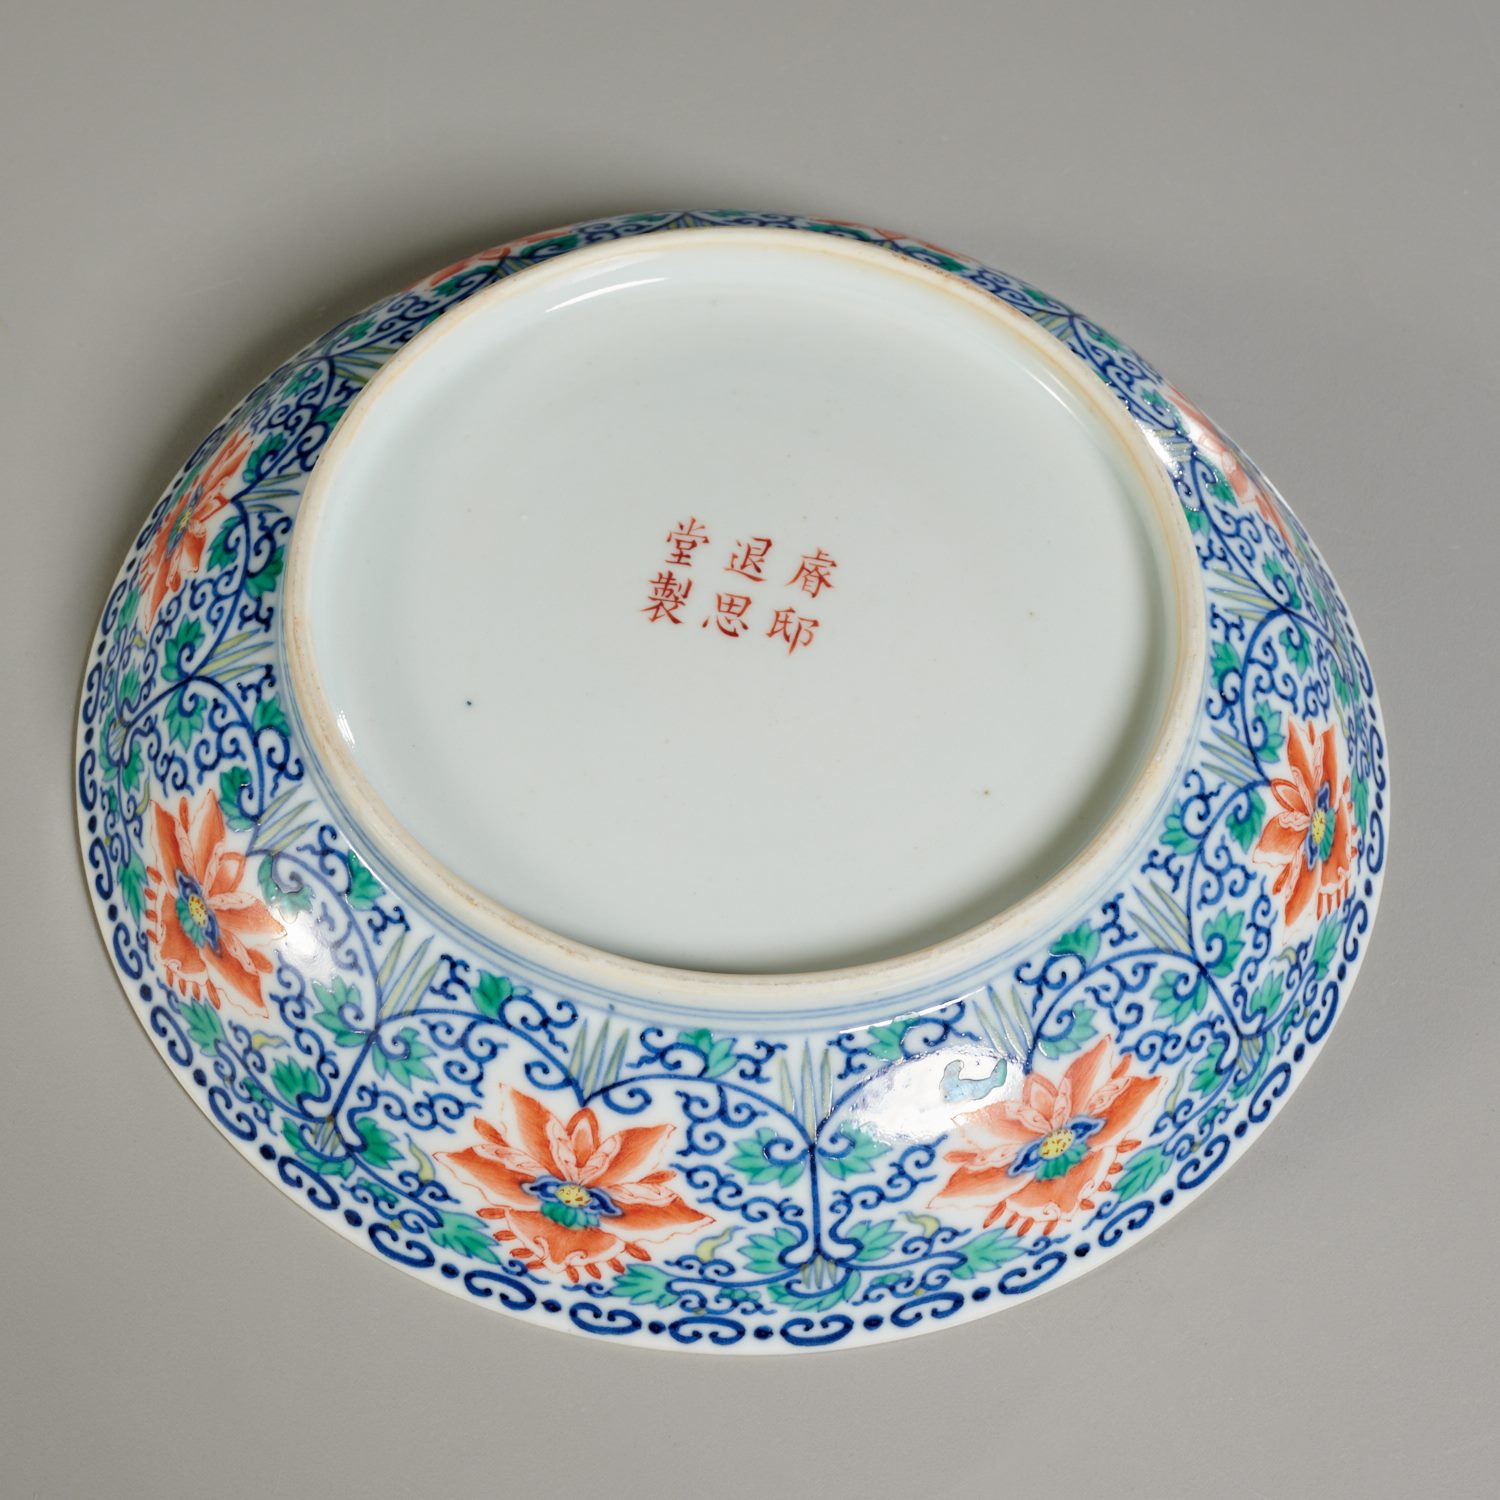 Chinese doucai porcelain dish - Image 3 of 5